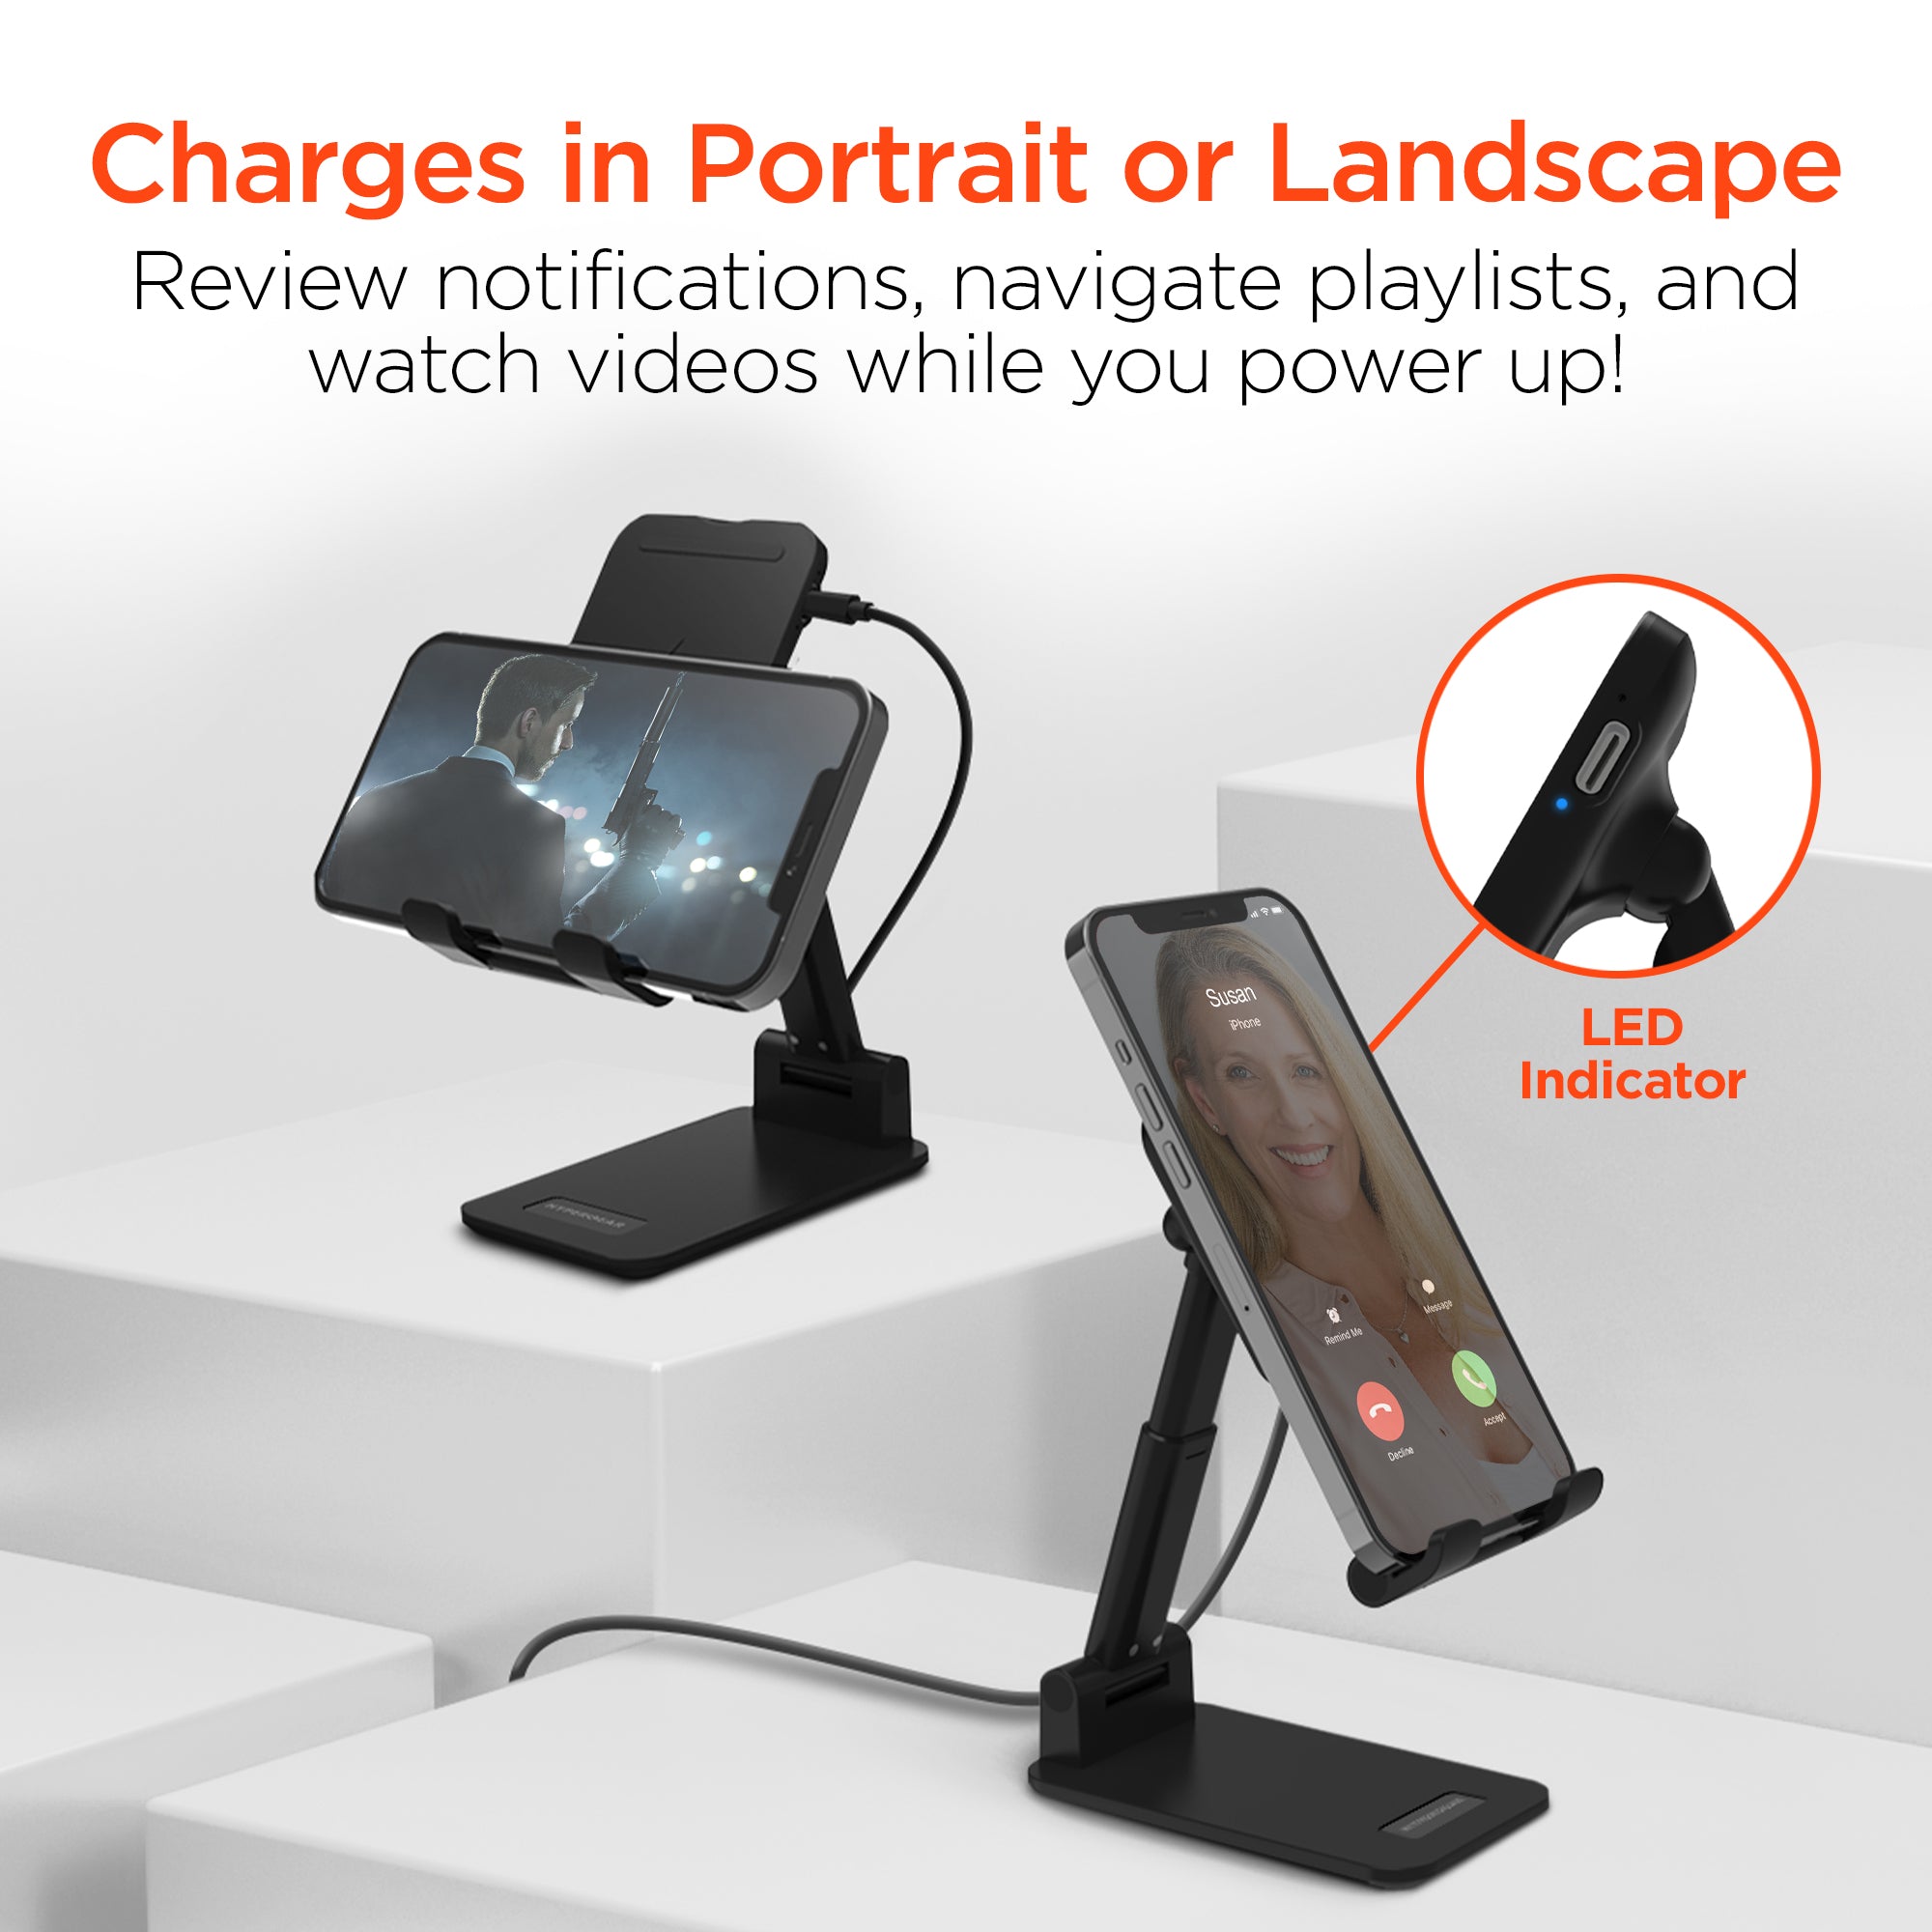 PowerFold 10W Wireless Fast Charging Stand | Black